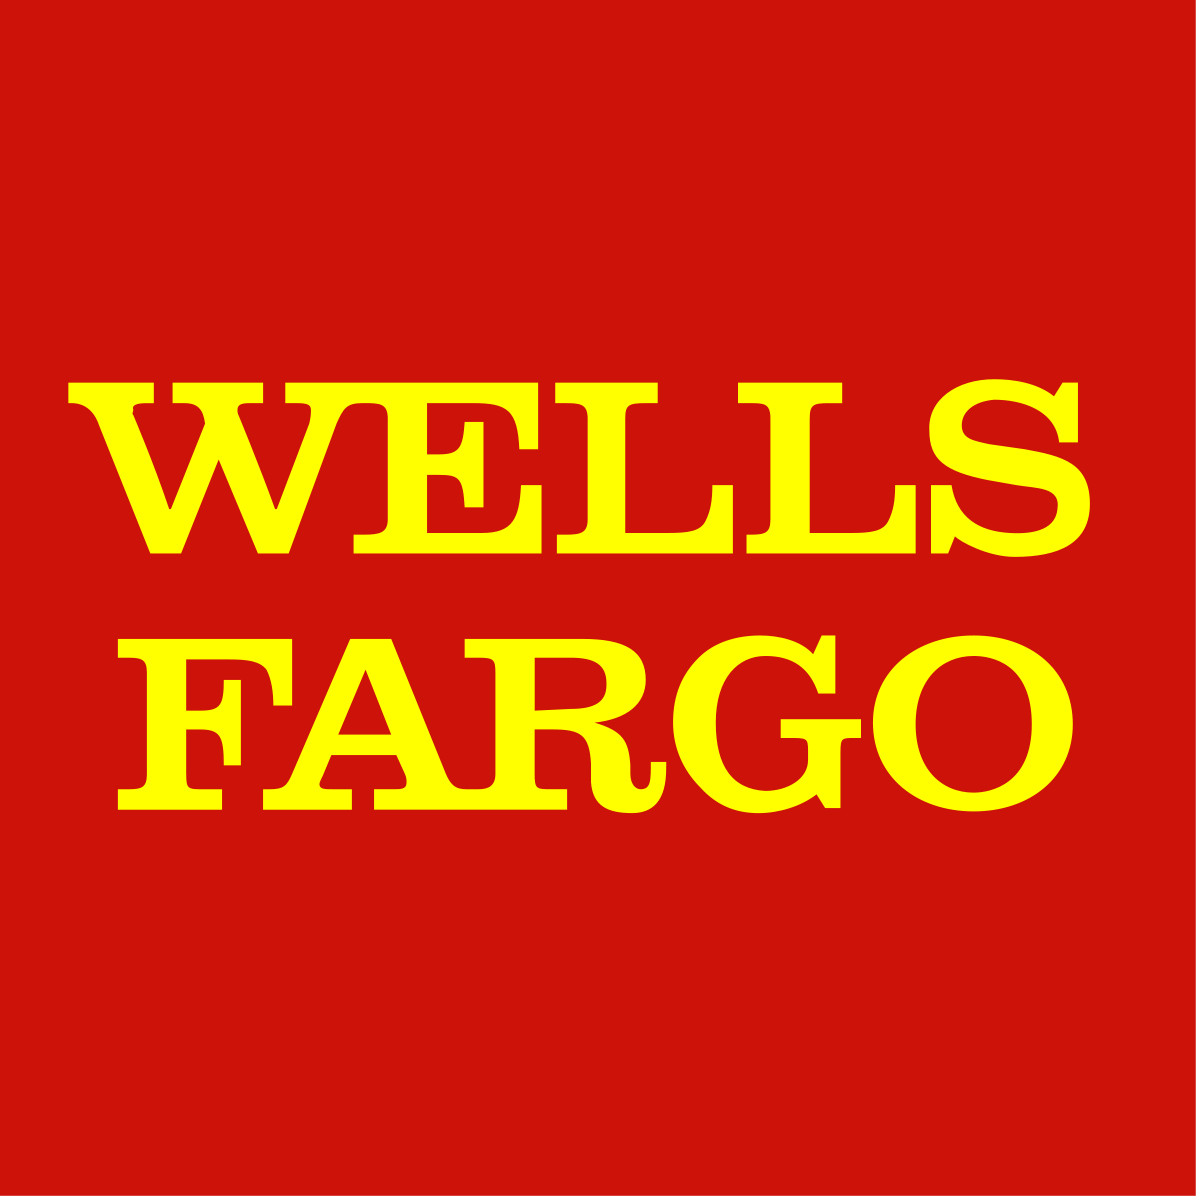 www.wellsfargo.com Online Banking How to Login | Sign Up